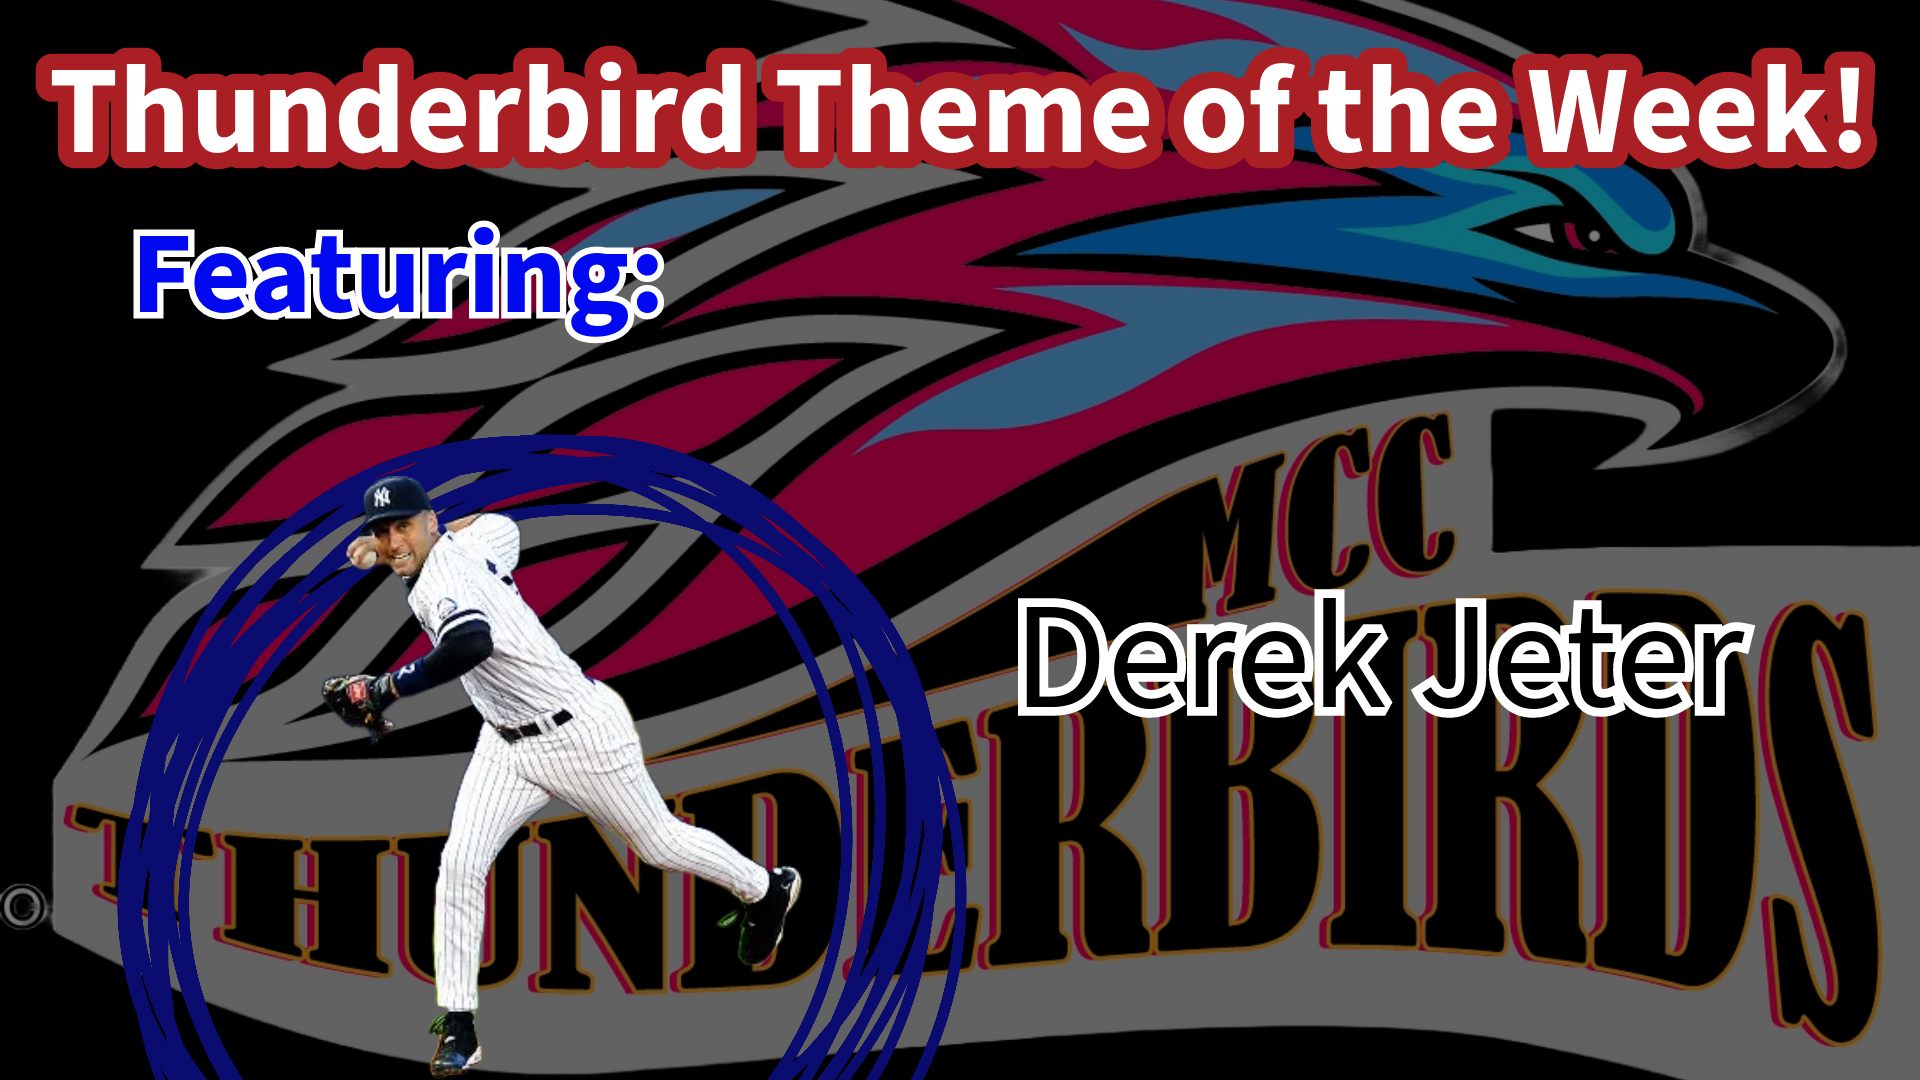 Thunderbird Theme of the Week...Featuring Derek Jeter